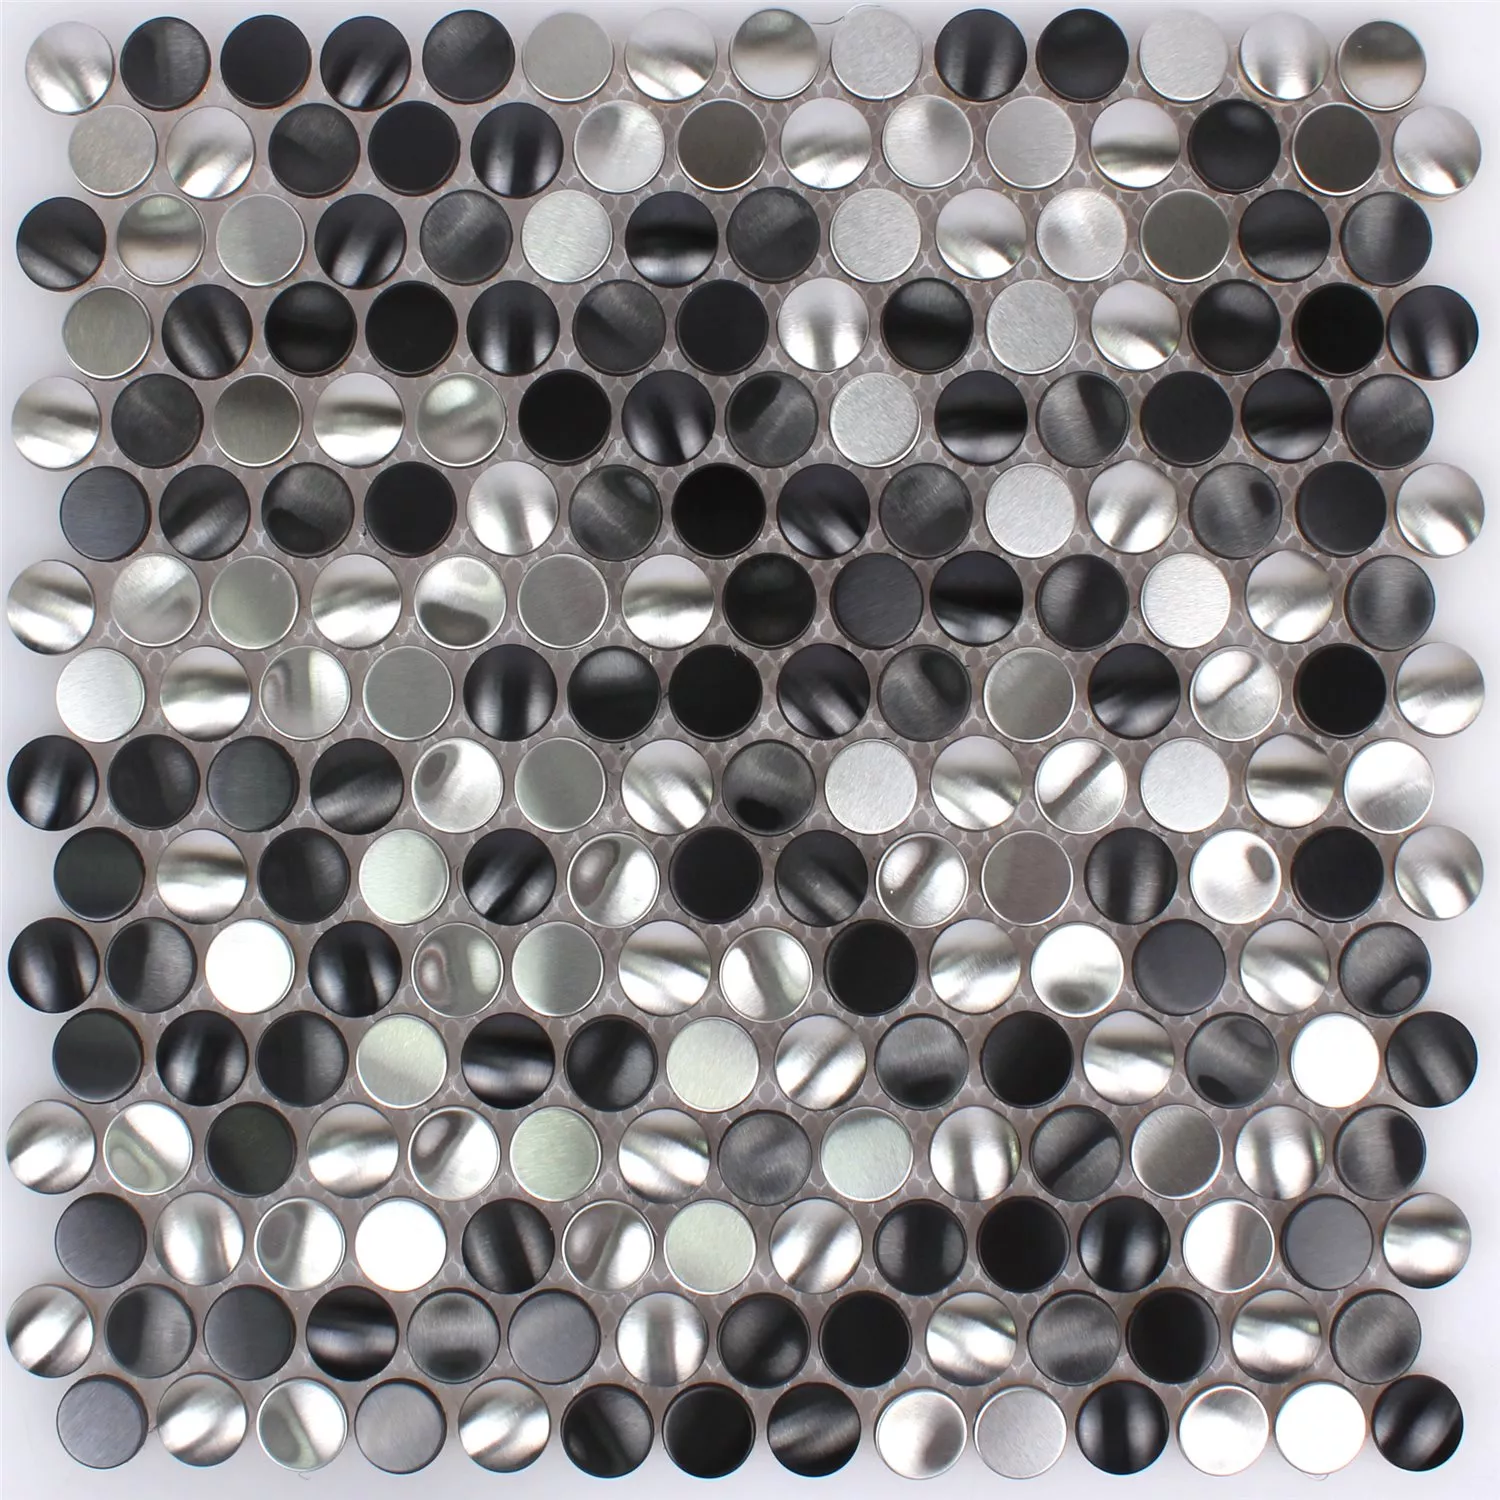 Sample Mosaic Tiles Stainless Steel Celeus Black Silver Waved